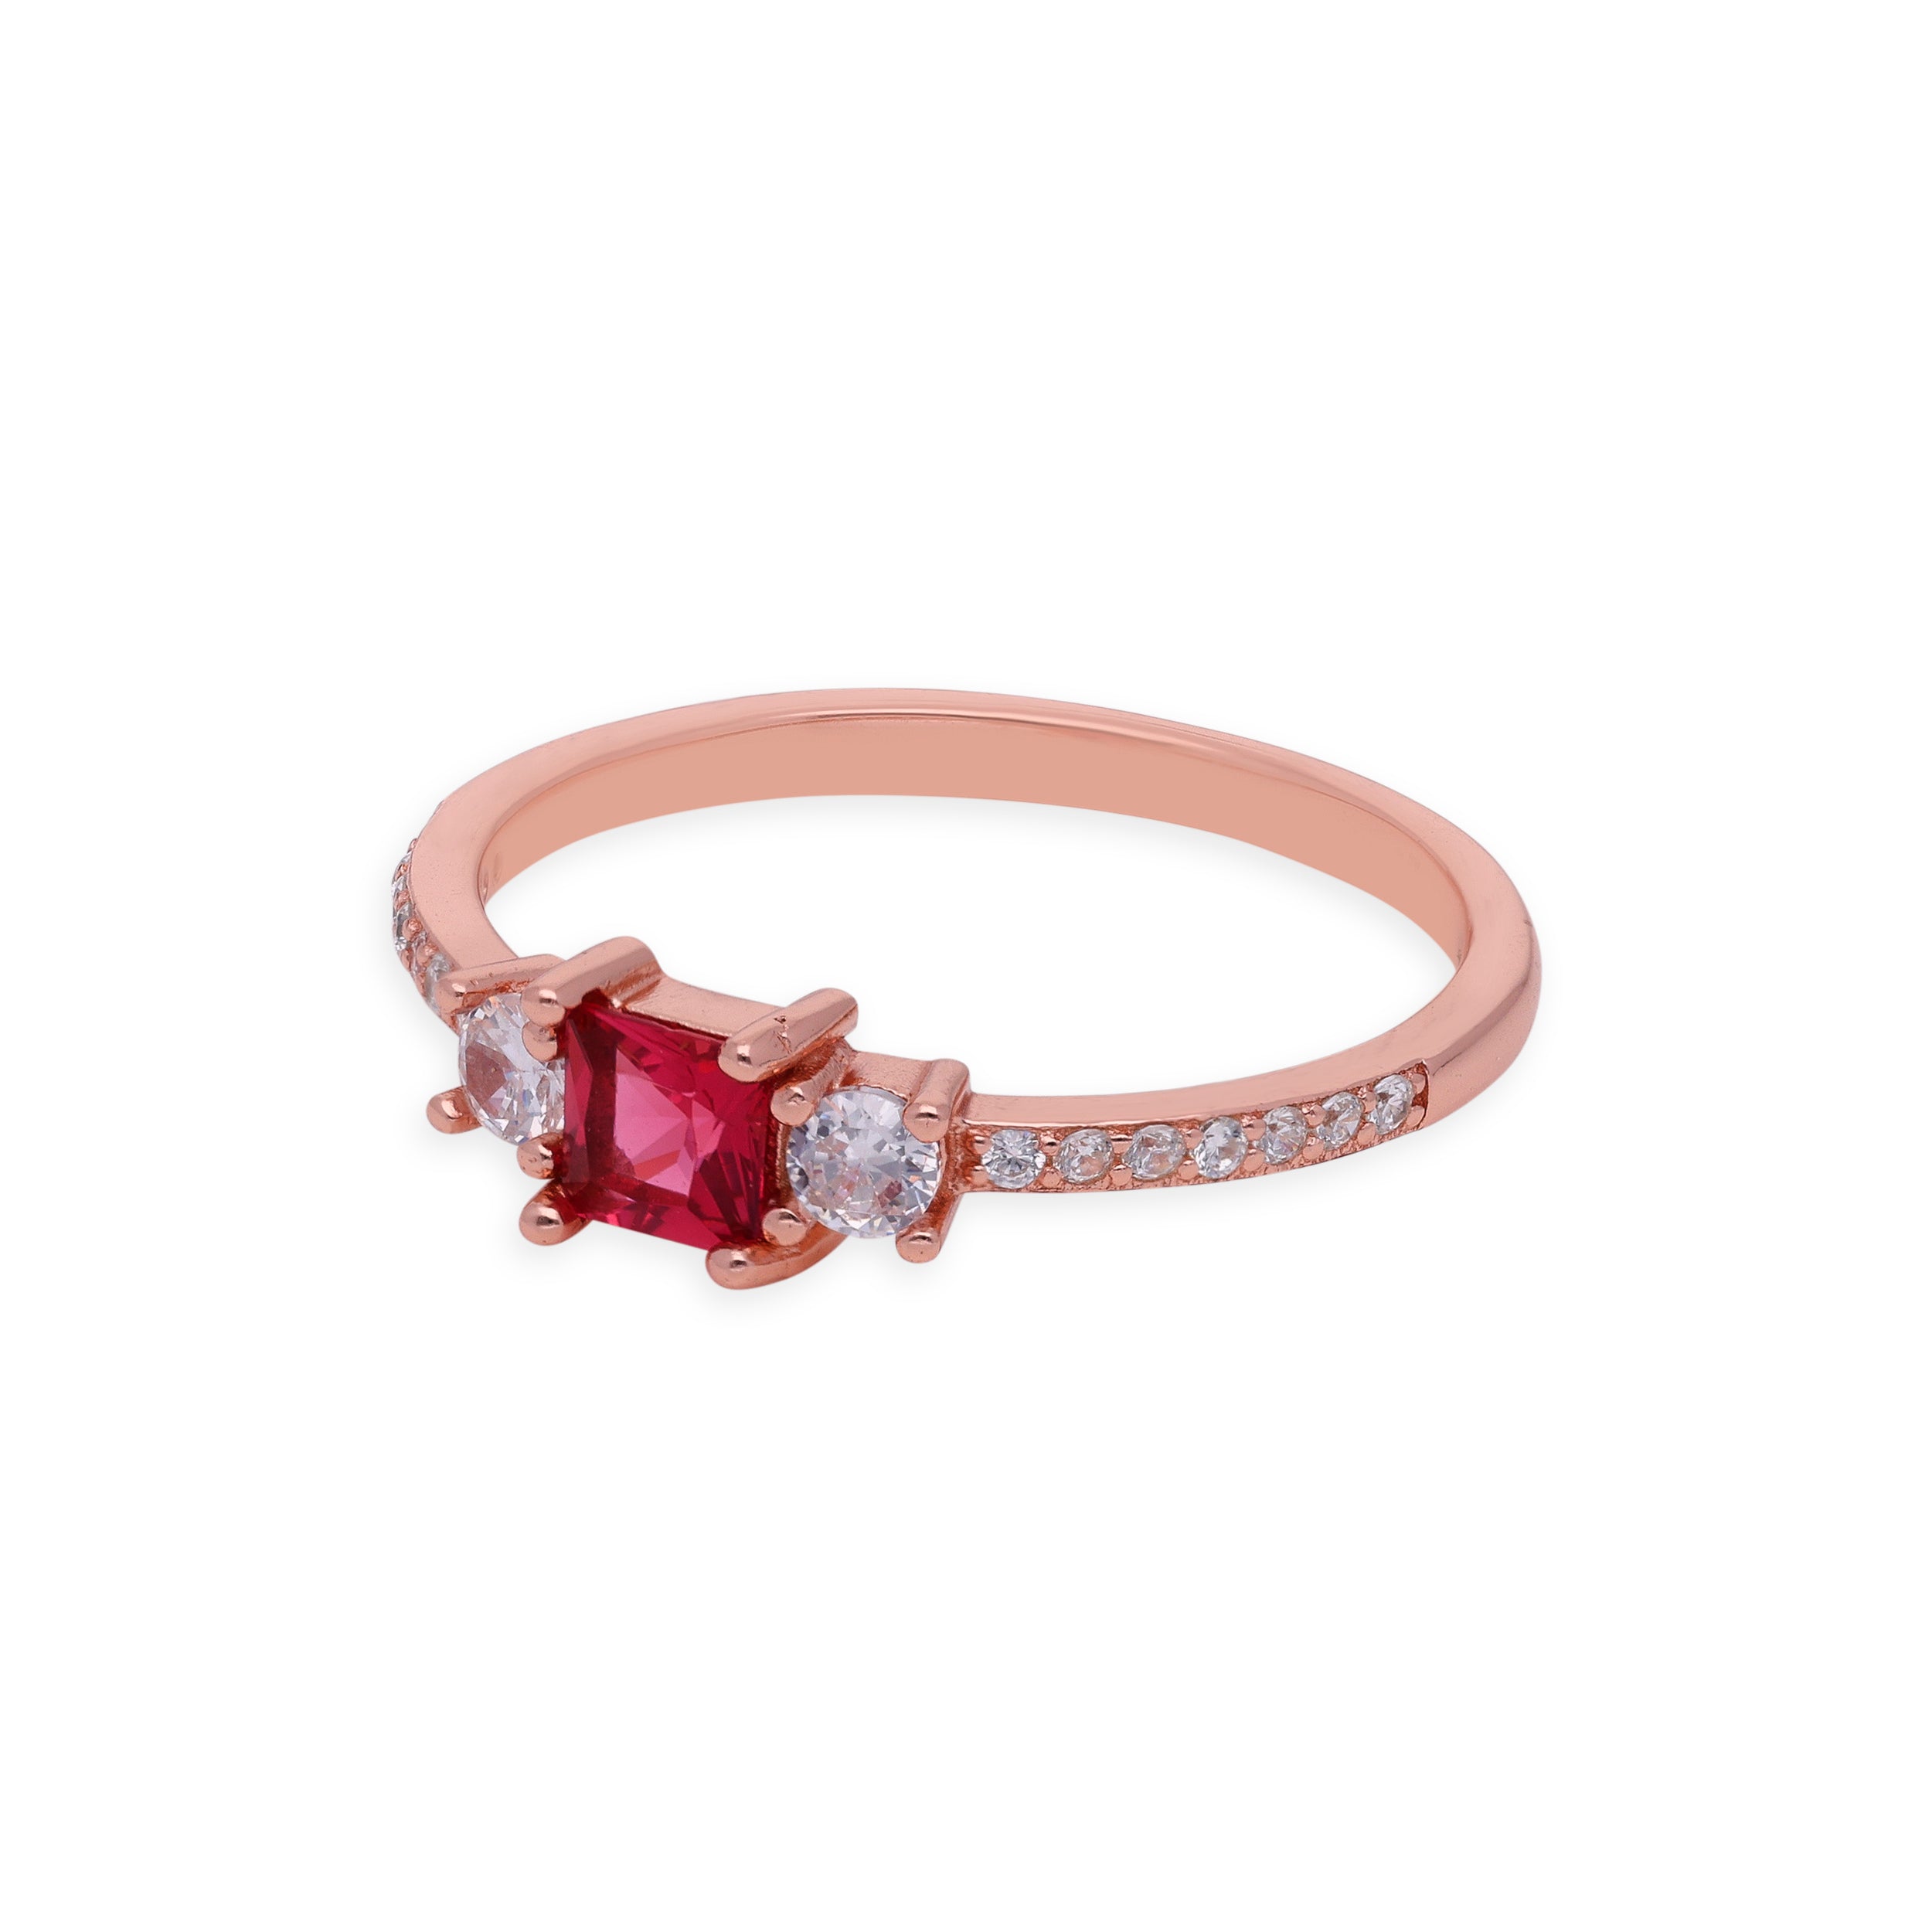 Elegant Radiance Red Gemstone Ring | SKU : 0003116135 , 0003116166